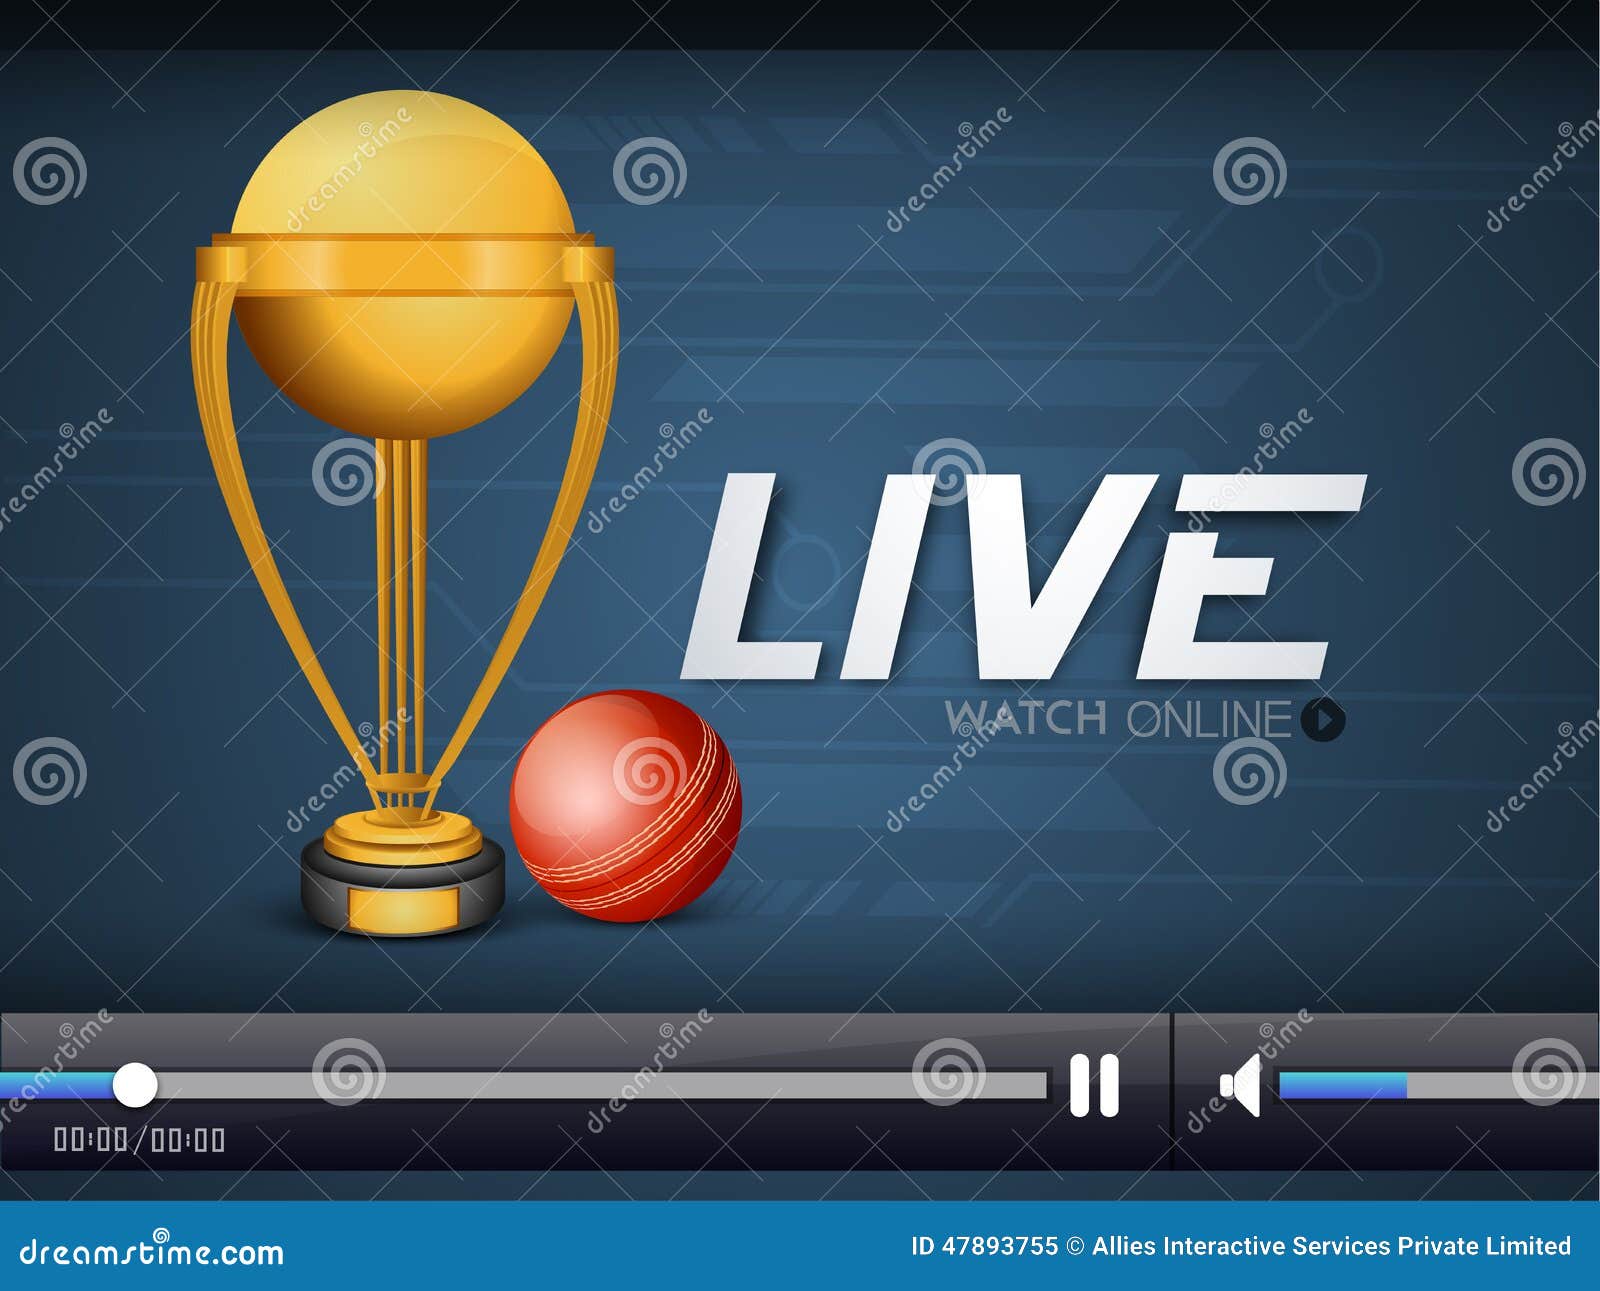 live ipl match watch online free